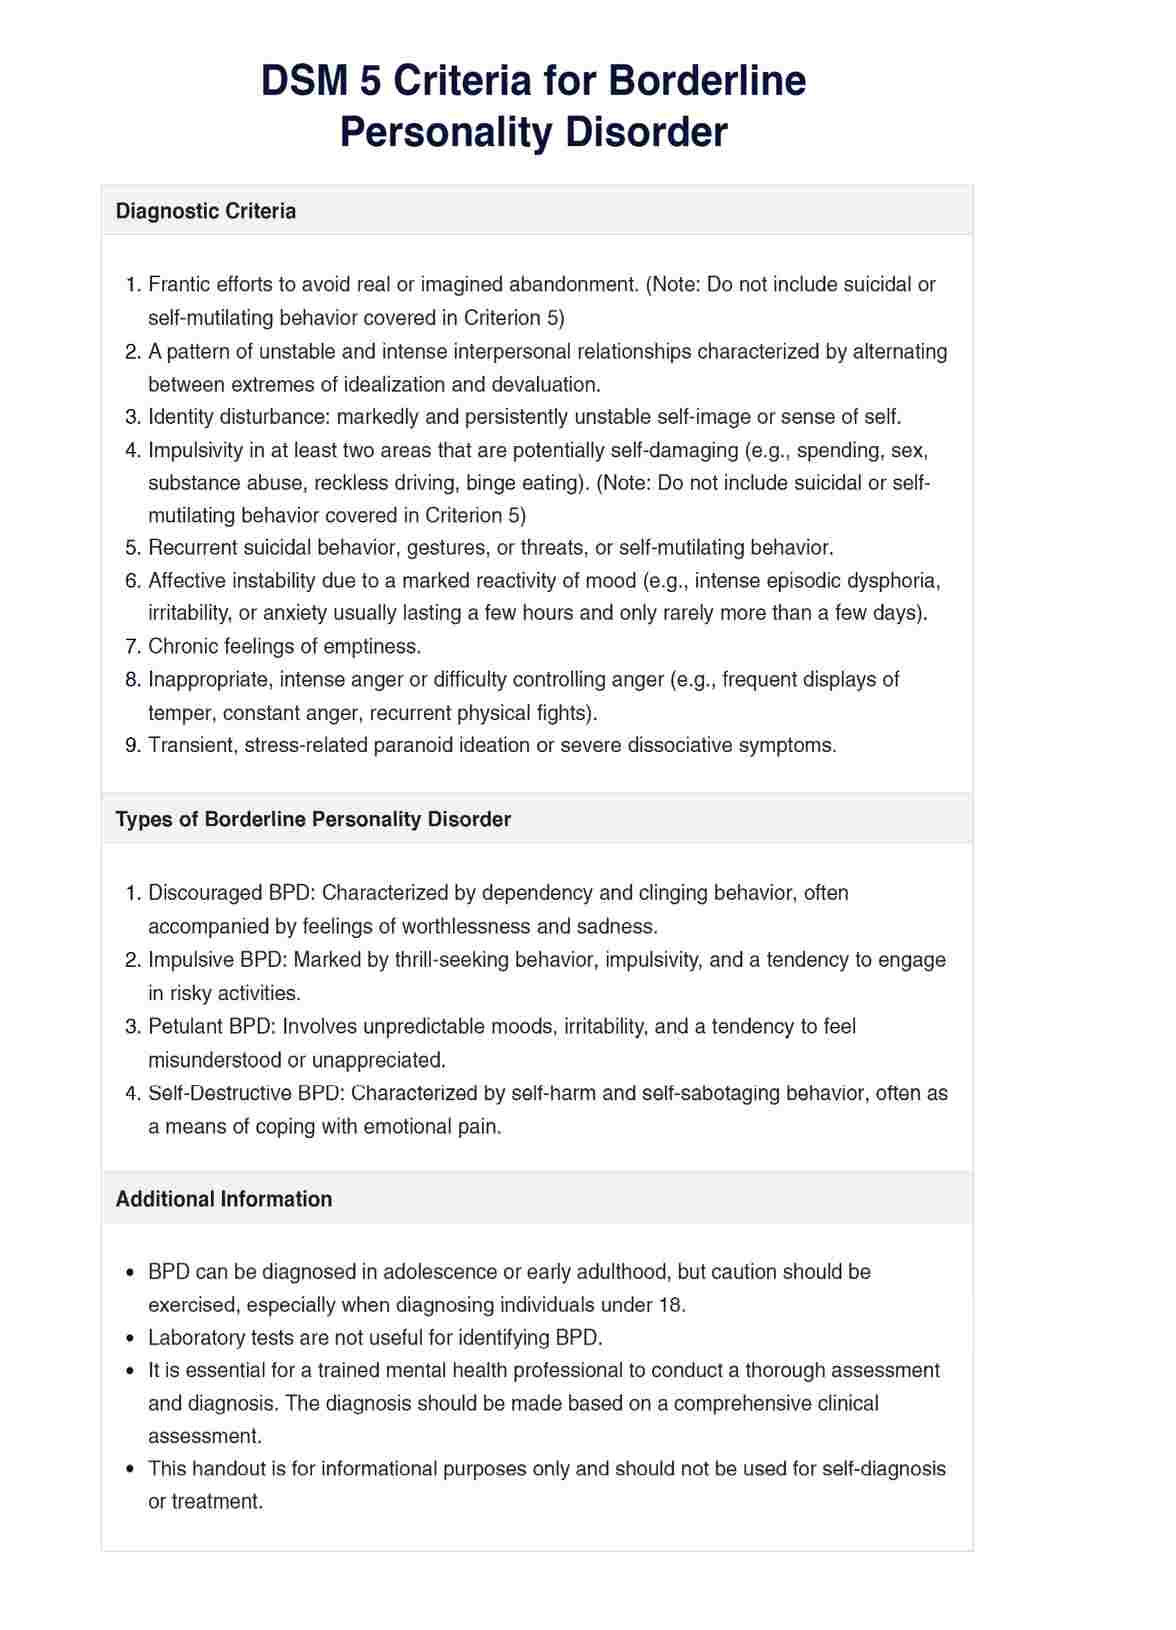 DSM 5 Criteria for Borderline Personality Disorder PDF Example